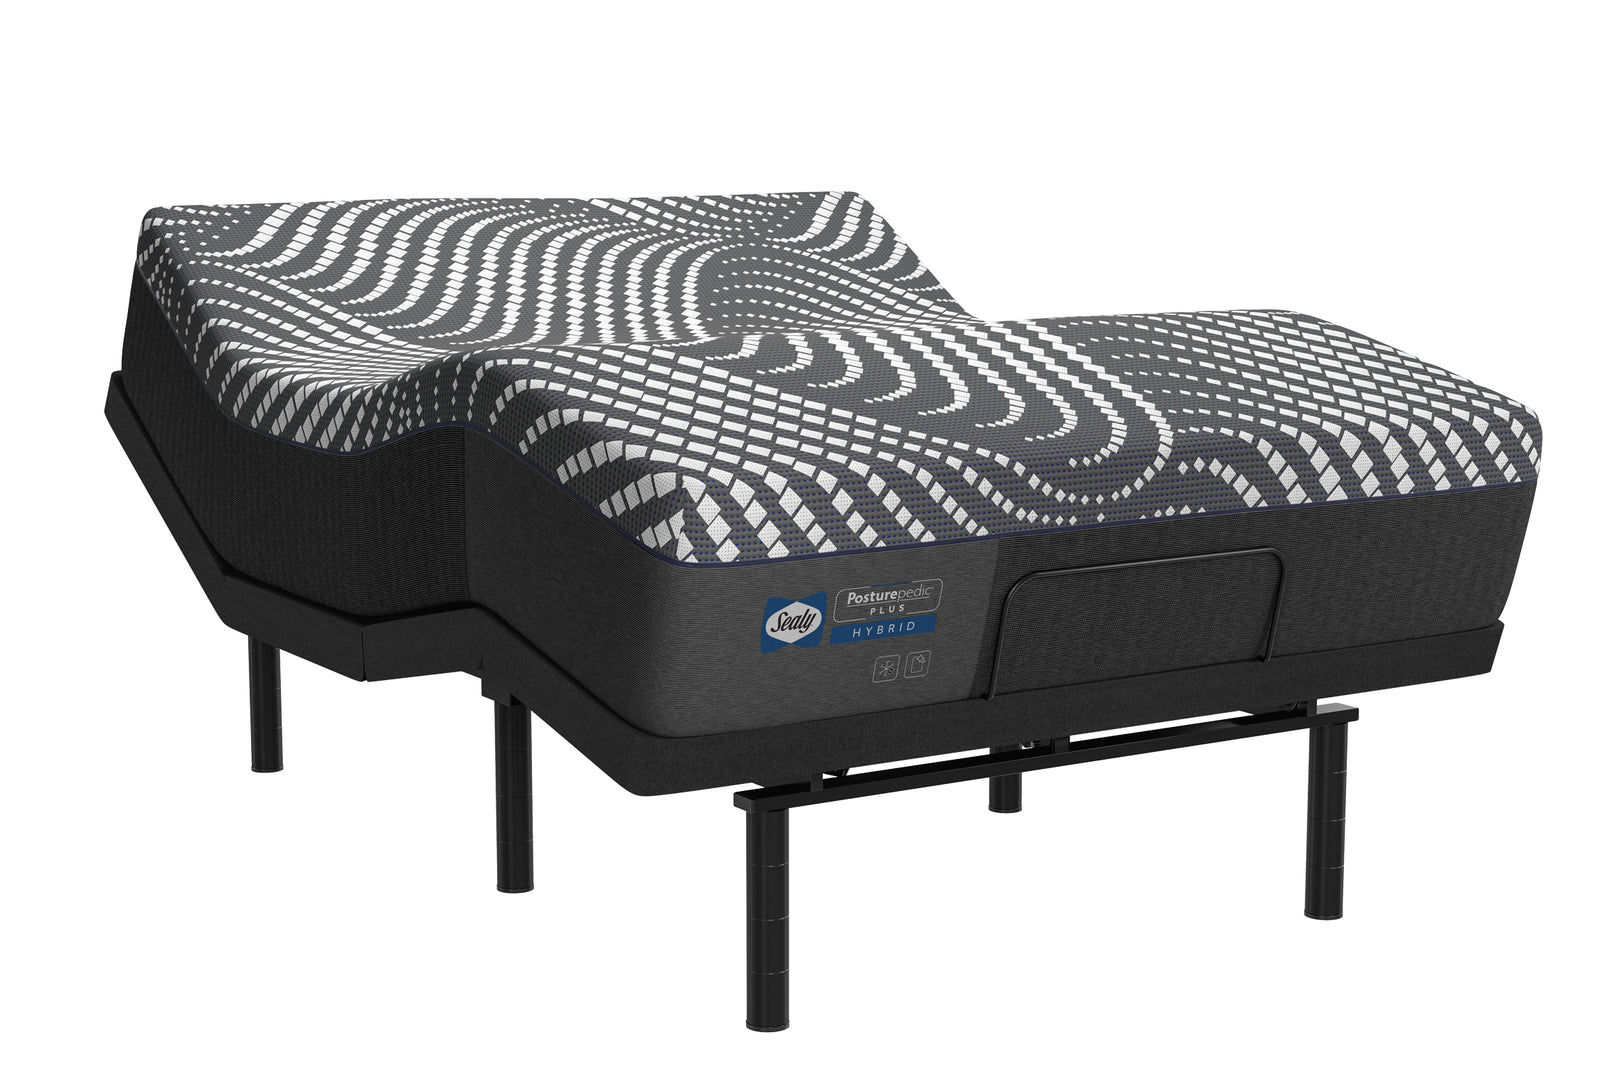 sealy posturepedic hybrid kingsthorne plush mattress reviews